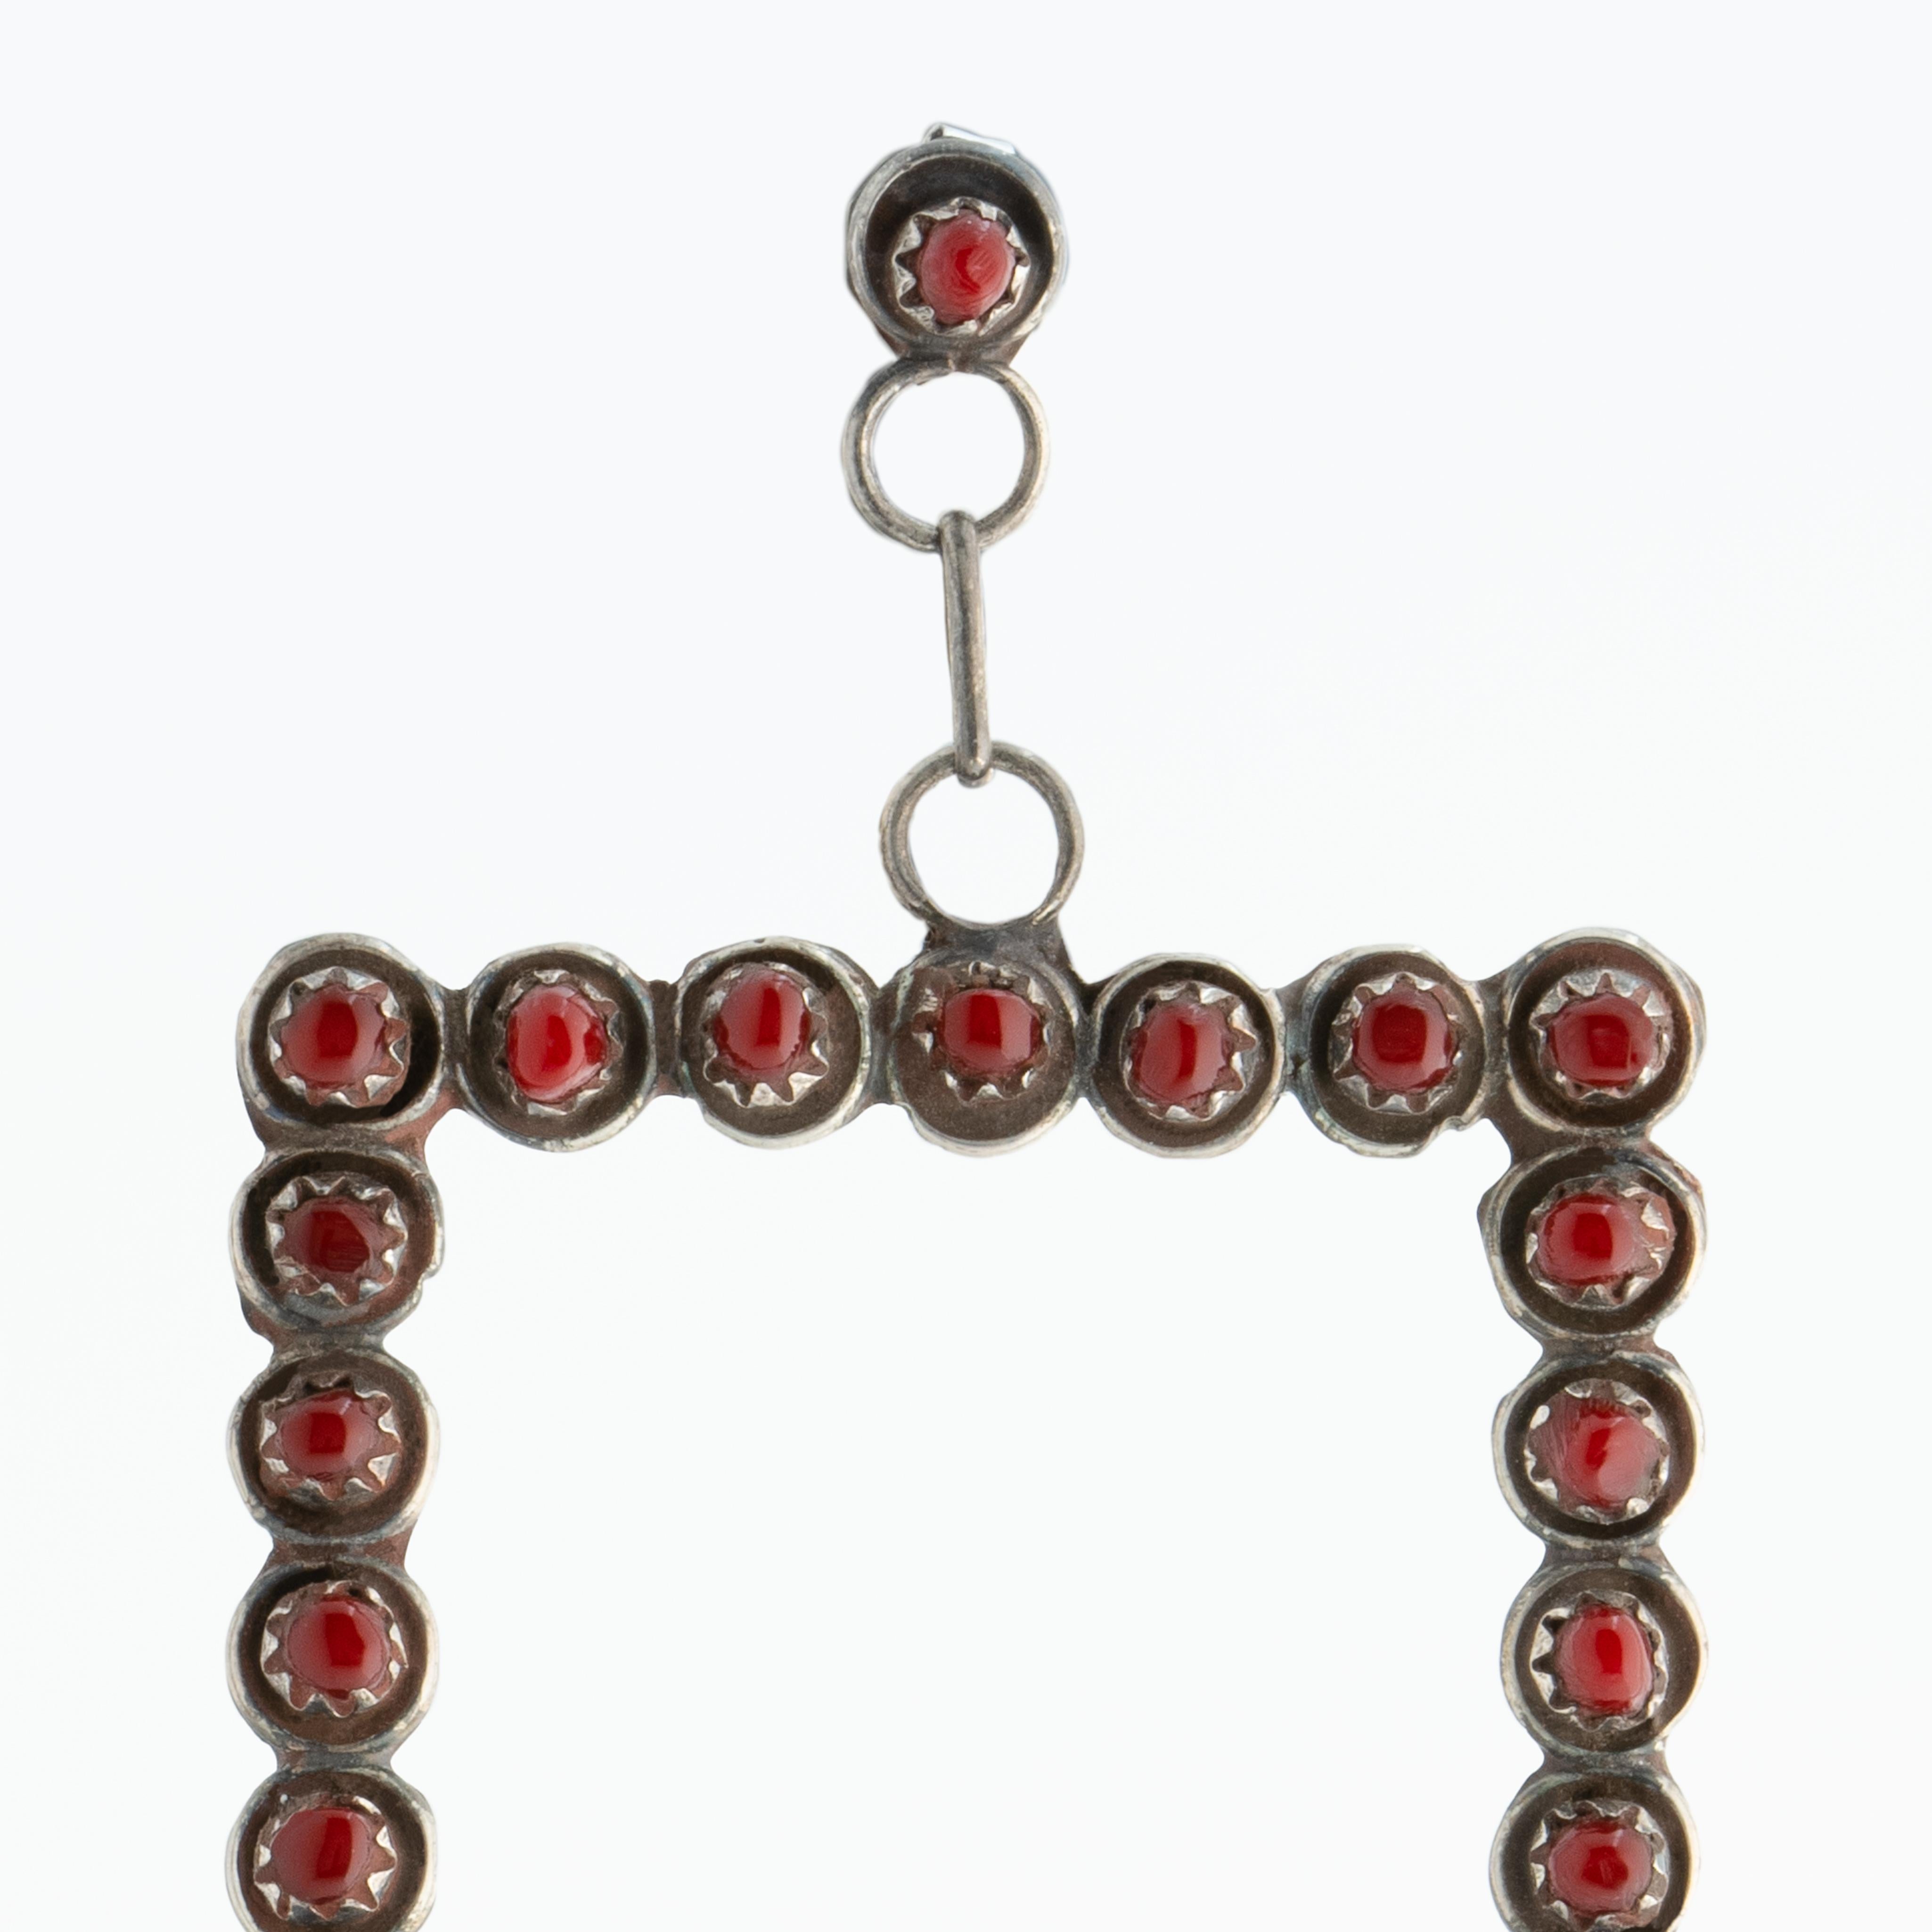 Vintage Extra Large Zuni Hand-Wrought Silver and Coral Rectangle earrings c.1960

Chaque boucle d'oreille pèse 9,7 grammes
Longueur : 3,15